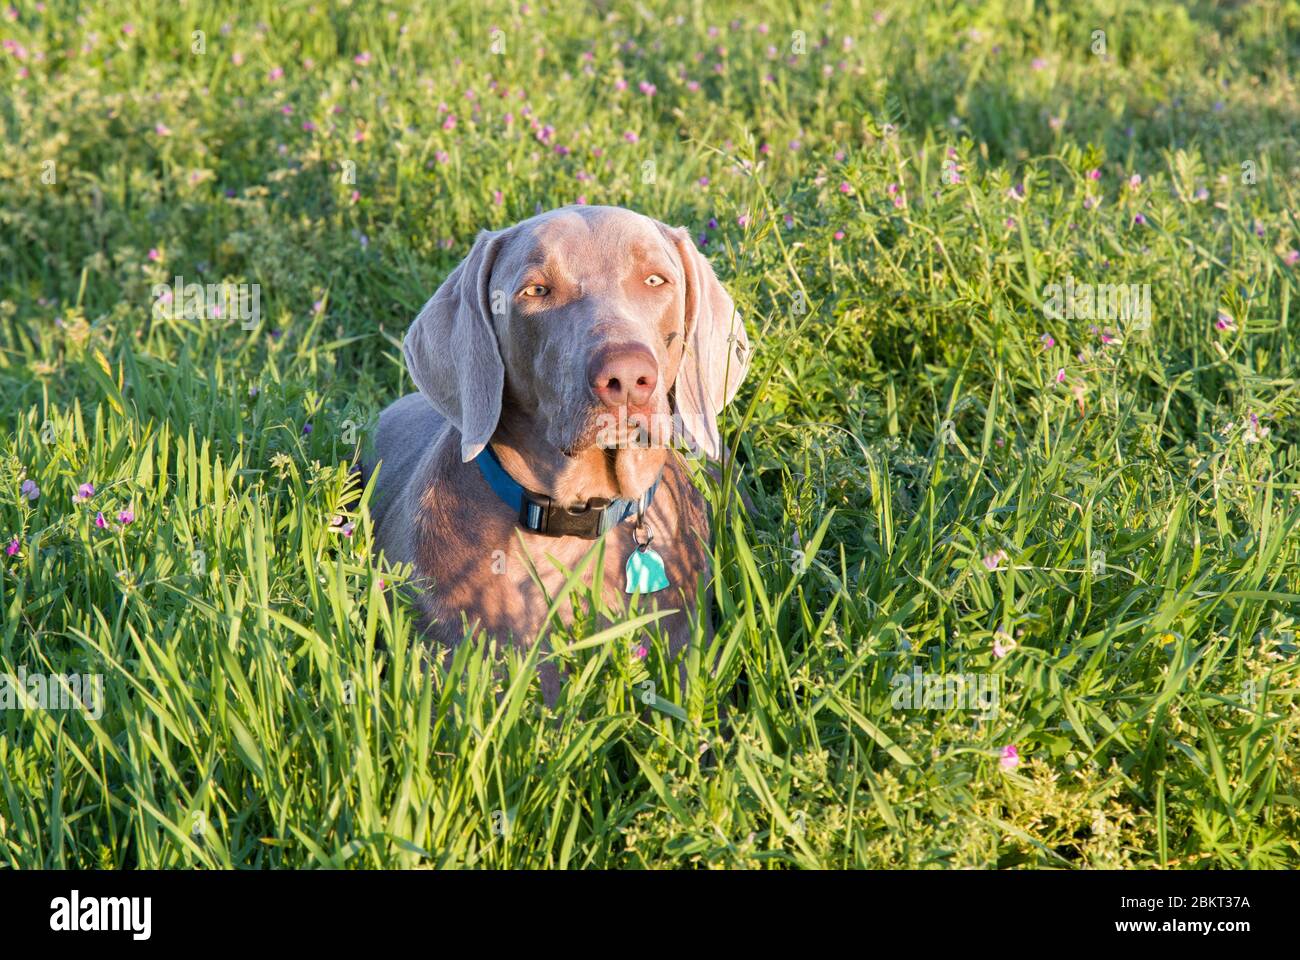 Bel cane Weimaraner riposato in erba alta tra i fiori, al sole di sera Foto Stock